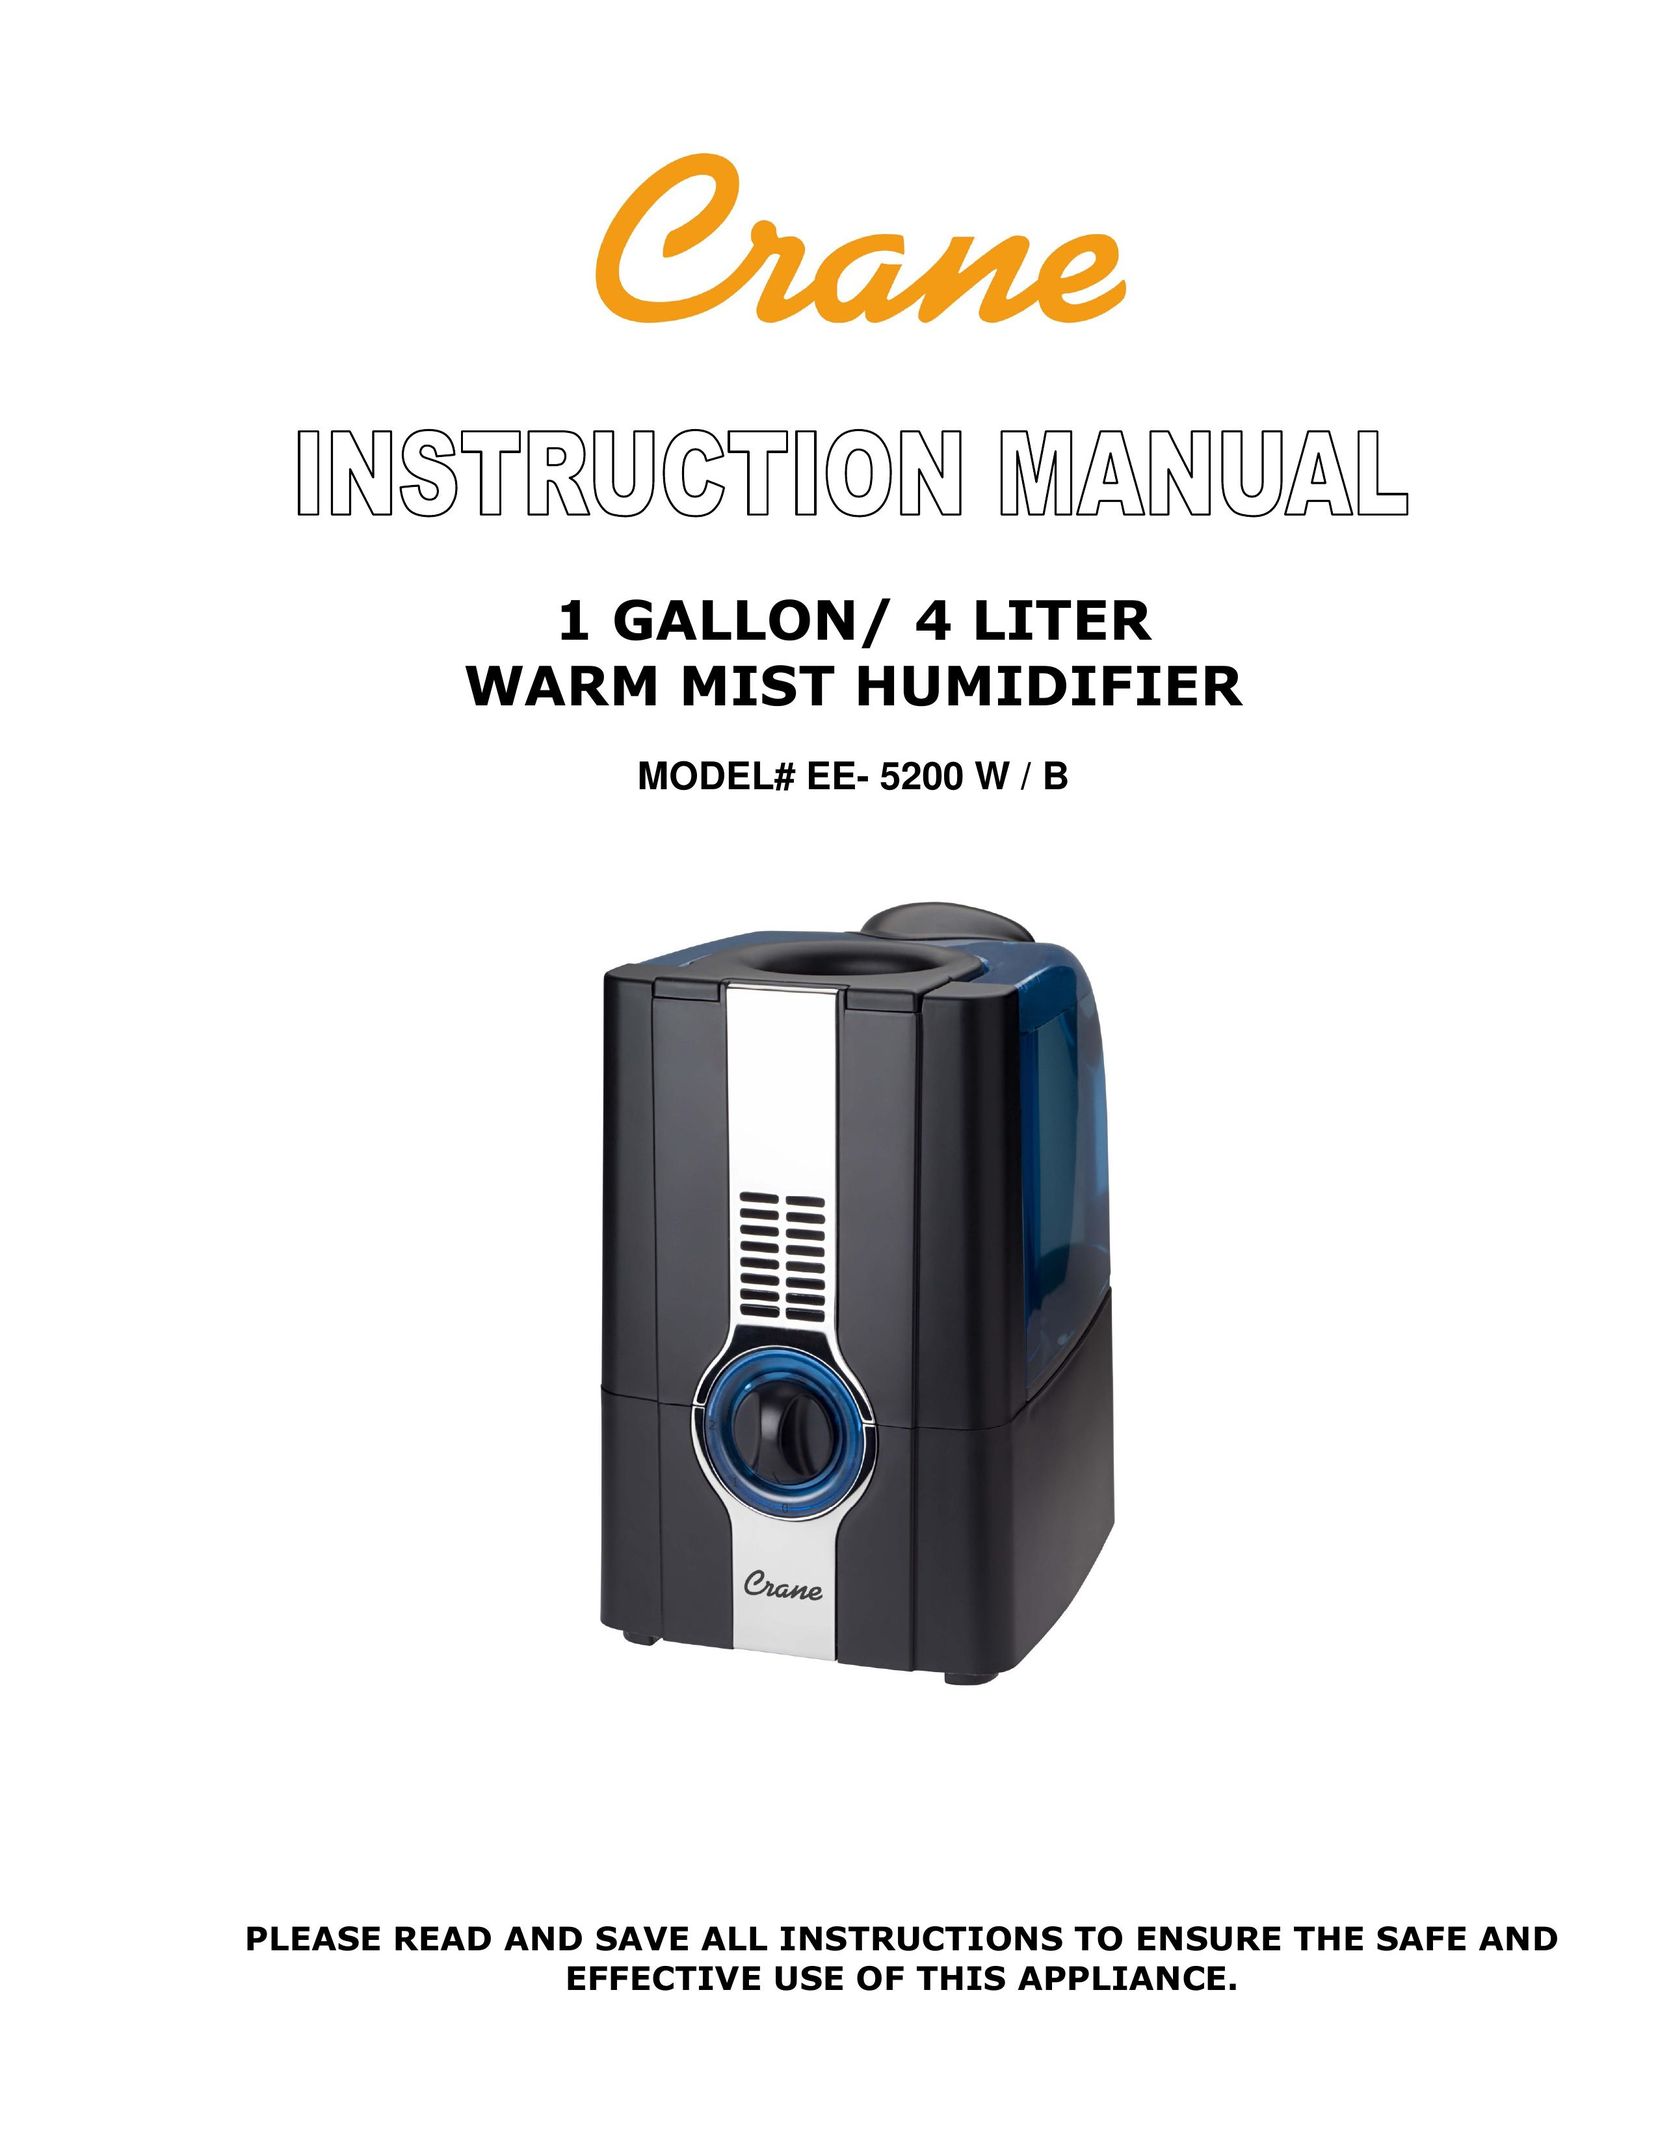 Crane EE- 5200 W / B Humidifier User Manual